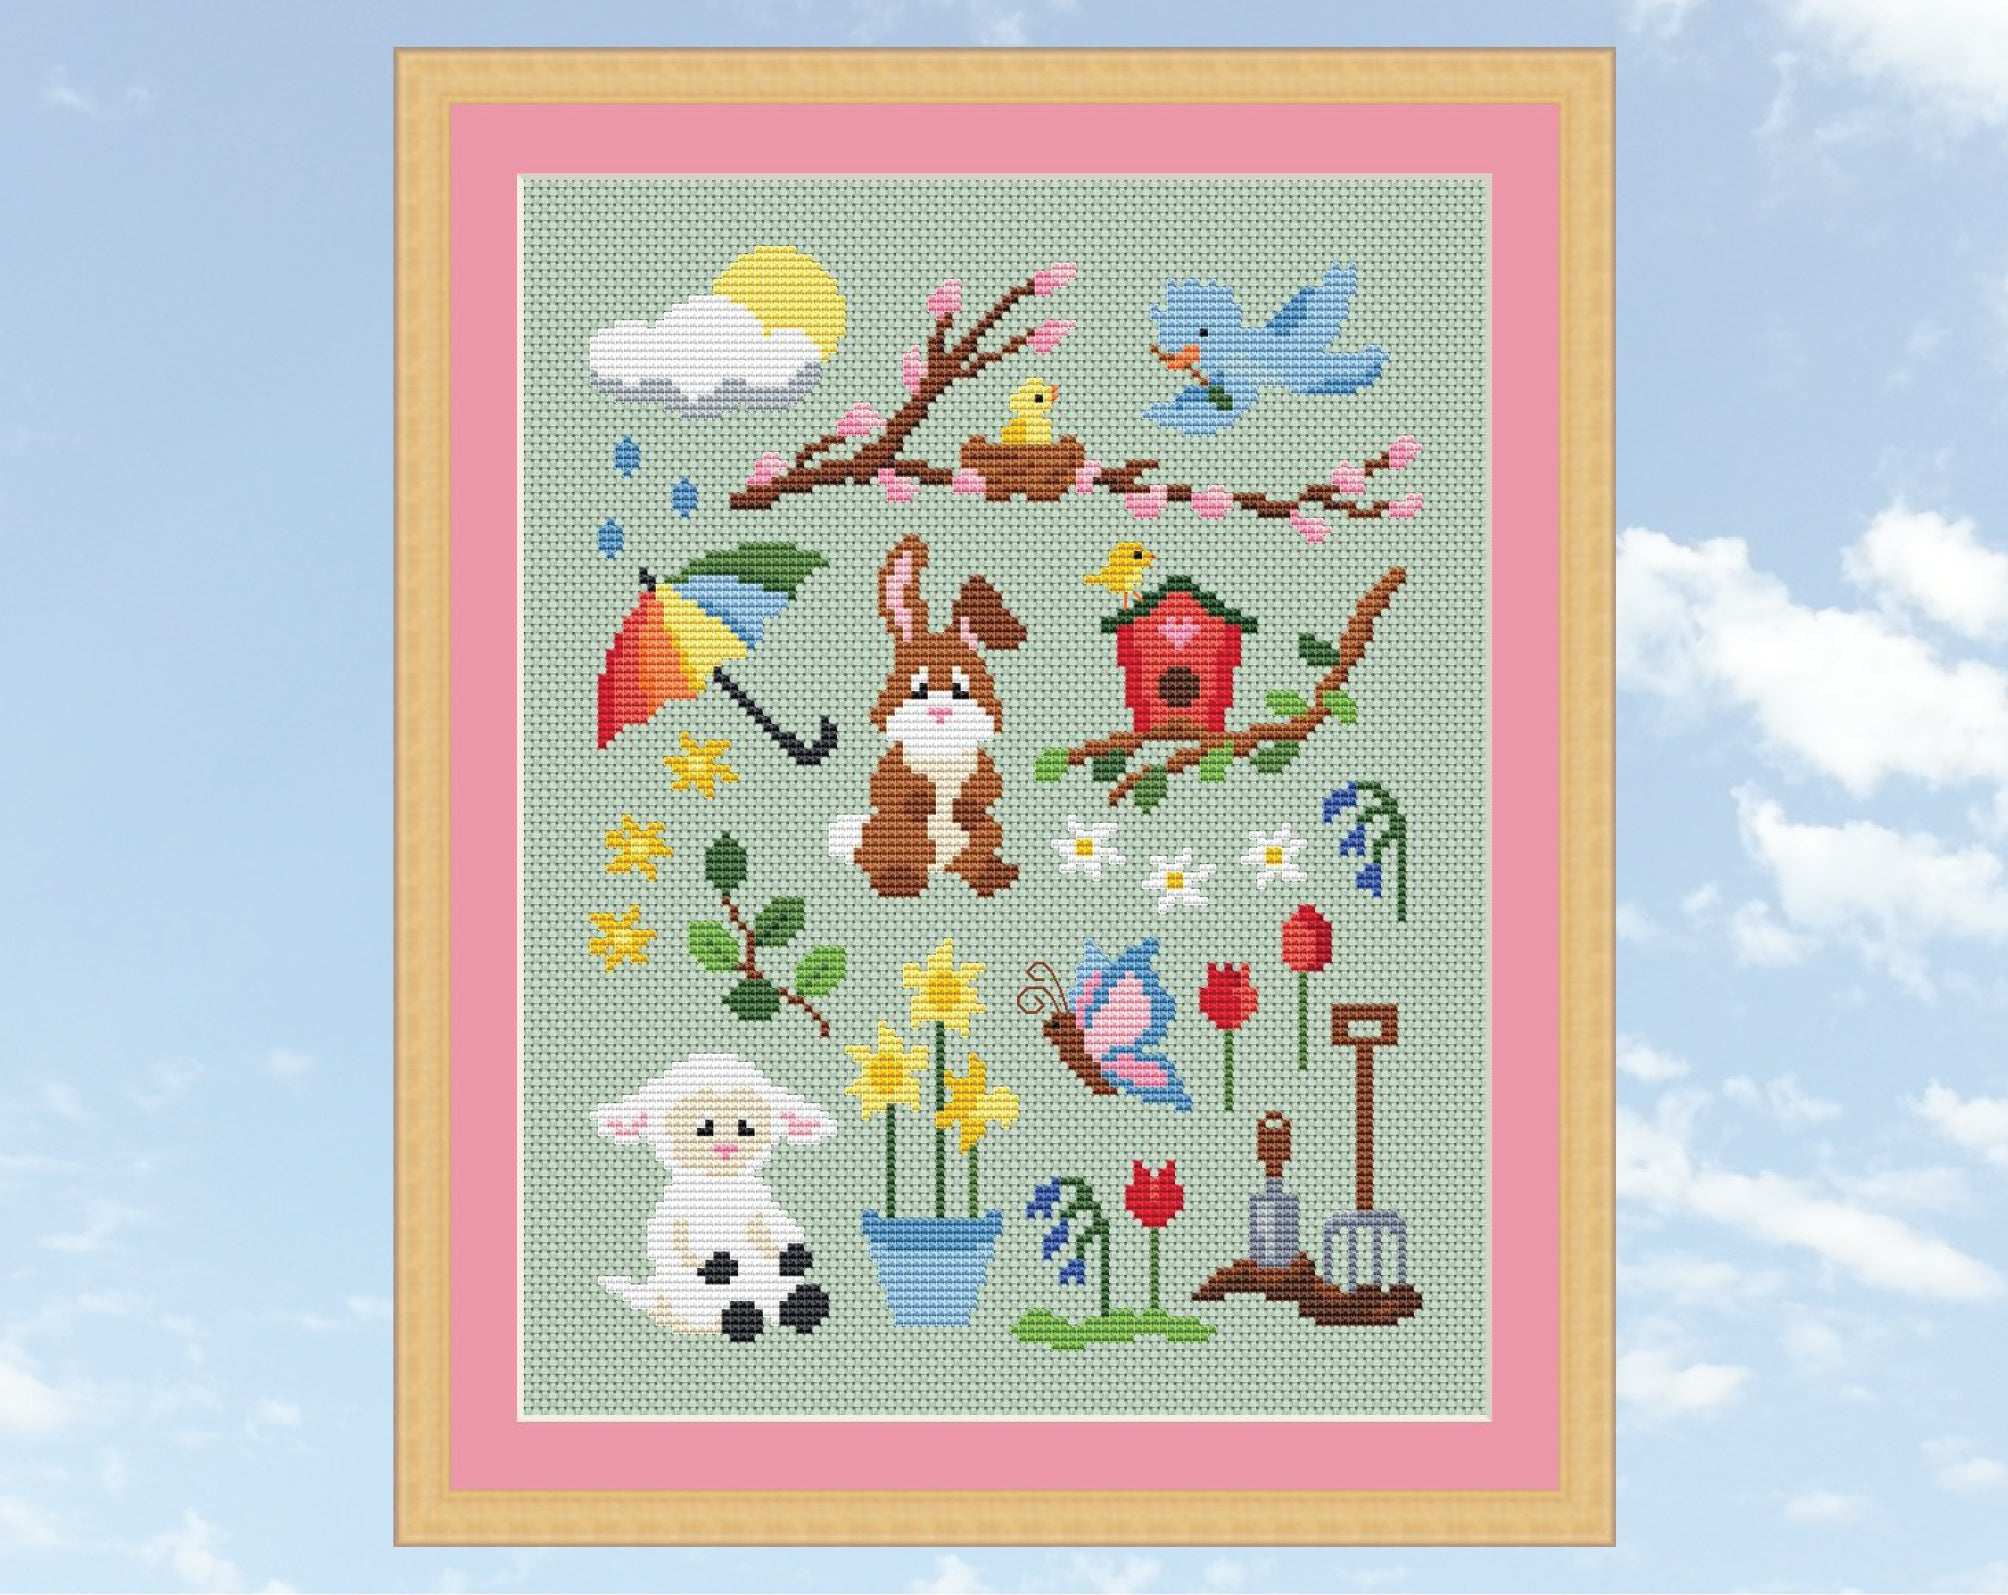 Spring Awakening cross stitch pattern - shown with frame